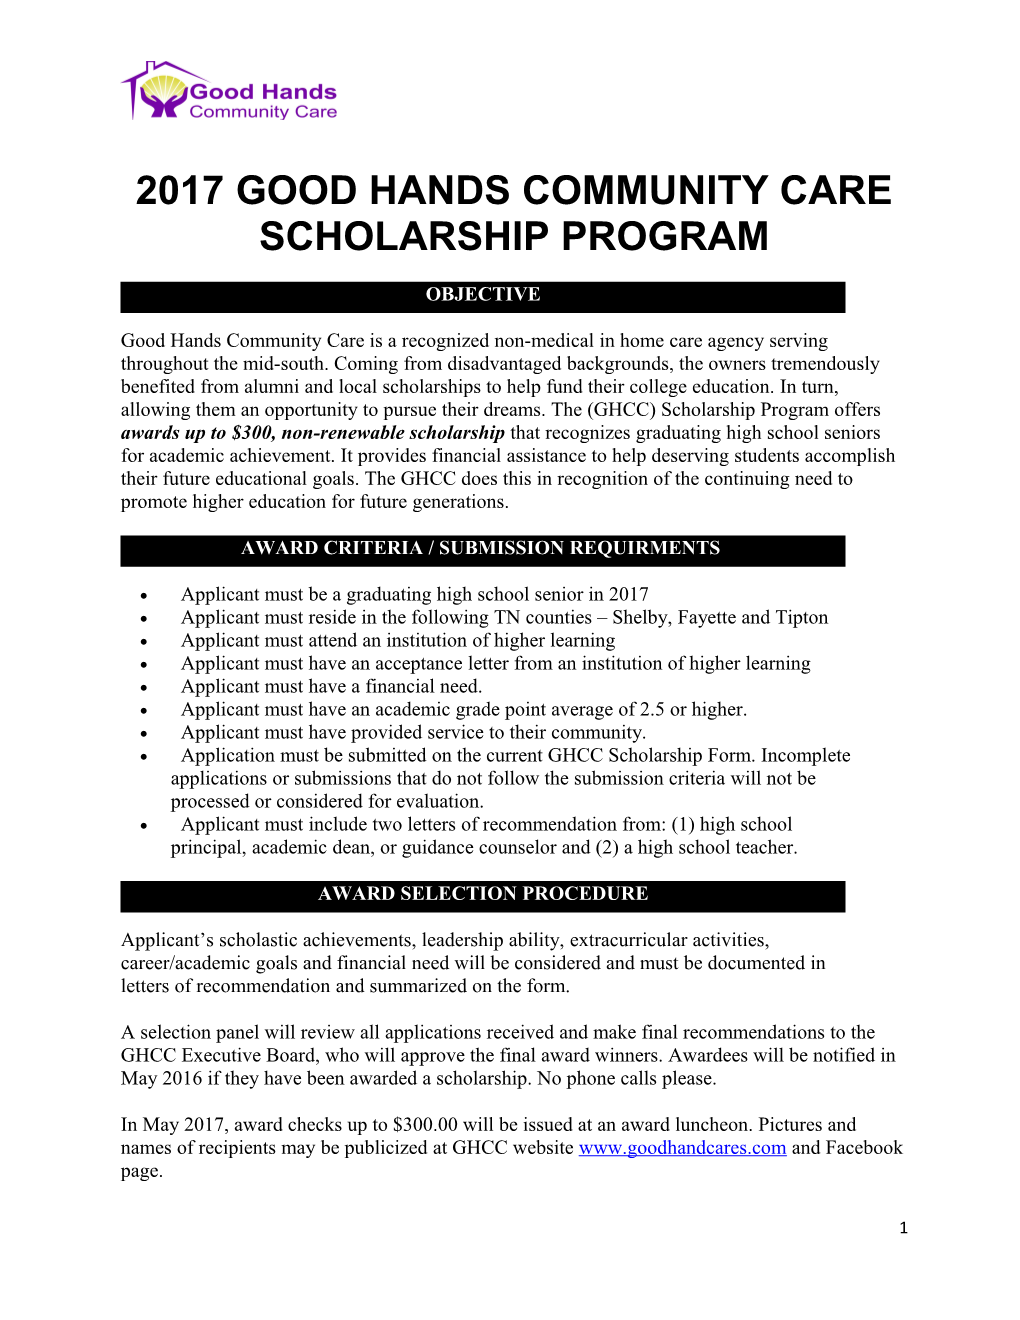 2017Good Hands Community Care Scholarship Program